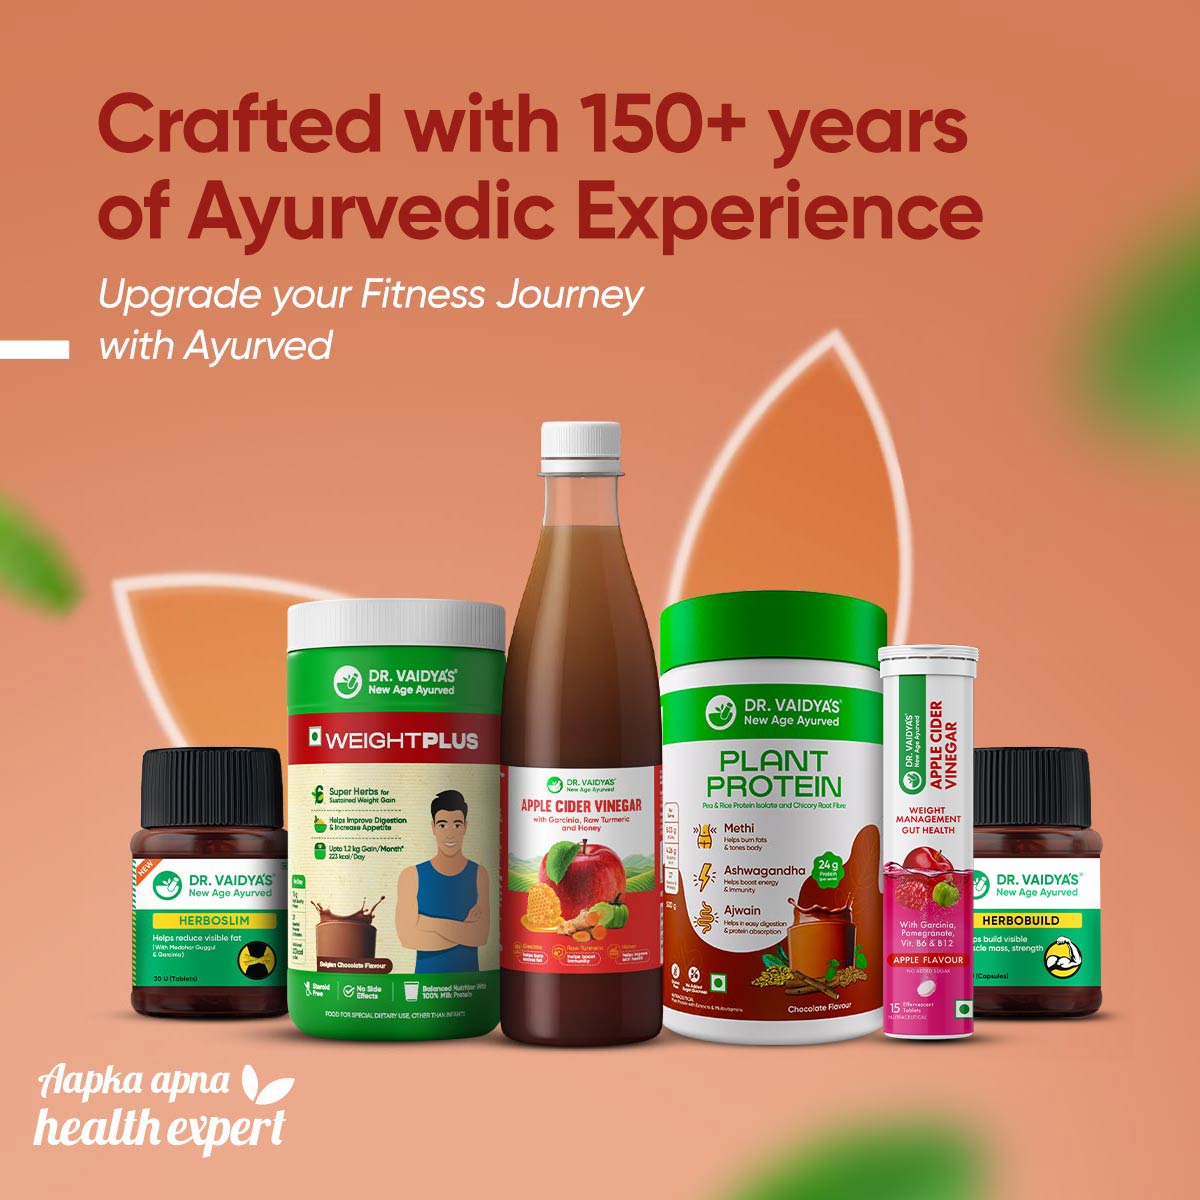 First-Ever Ayurvedic Apple Cider Vinegar With Garcinia, Raw Turmeric & Honey by Dr. Vaidya’s